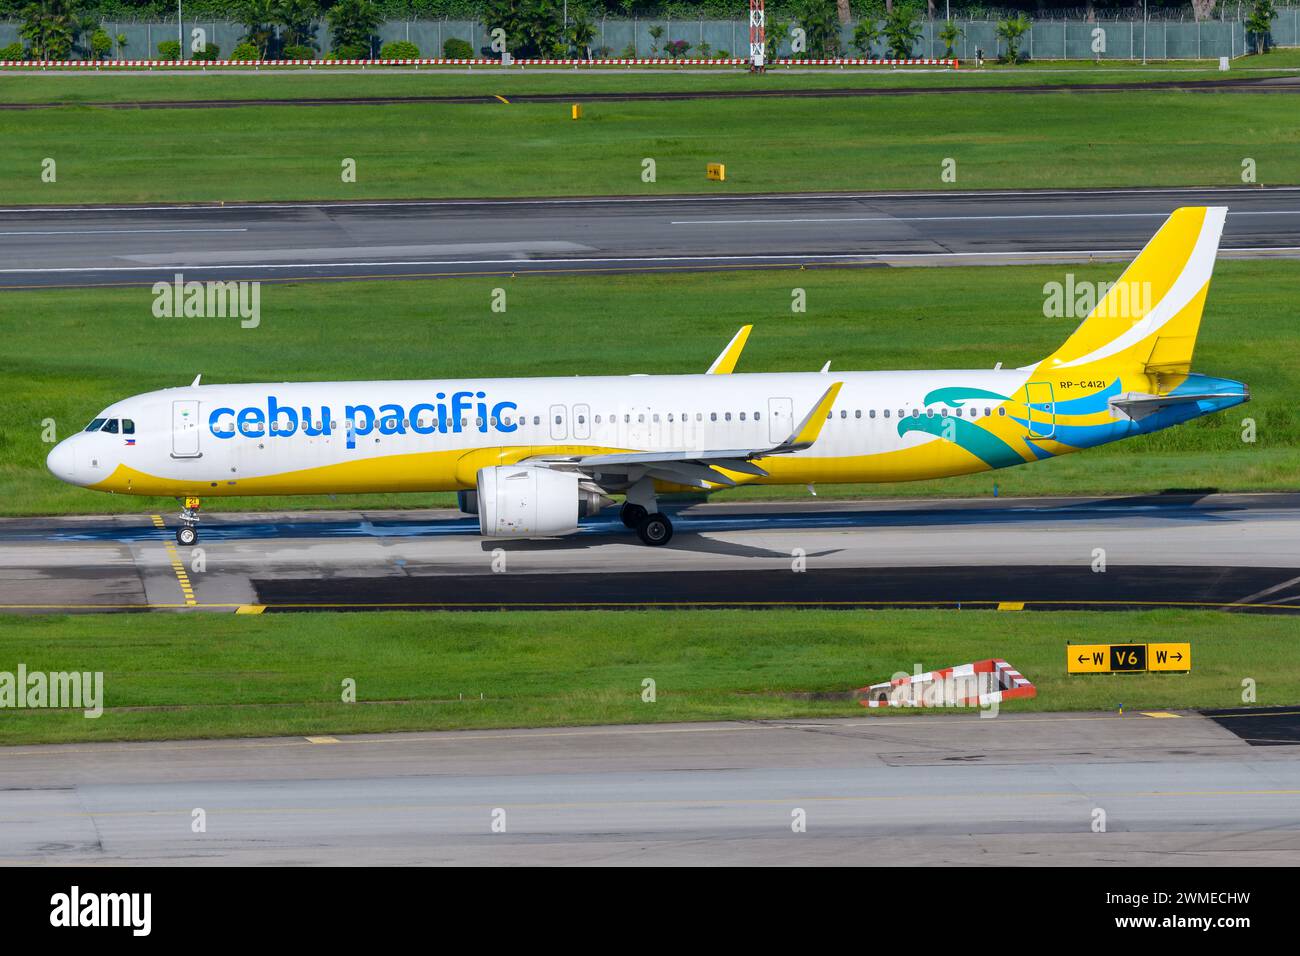 Cebu Pacific Airbus A321 aircraft taxiing. Airplane of Cebu Air Pacific model A321neo. Cebu airline plane. Stock Photo